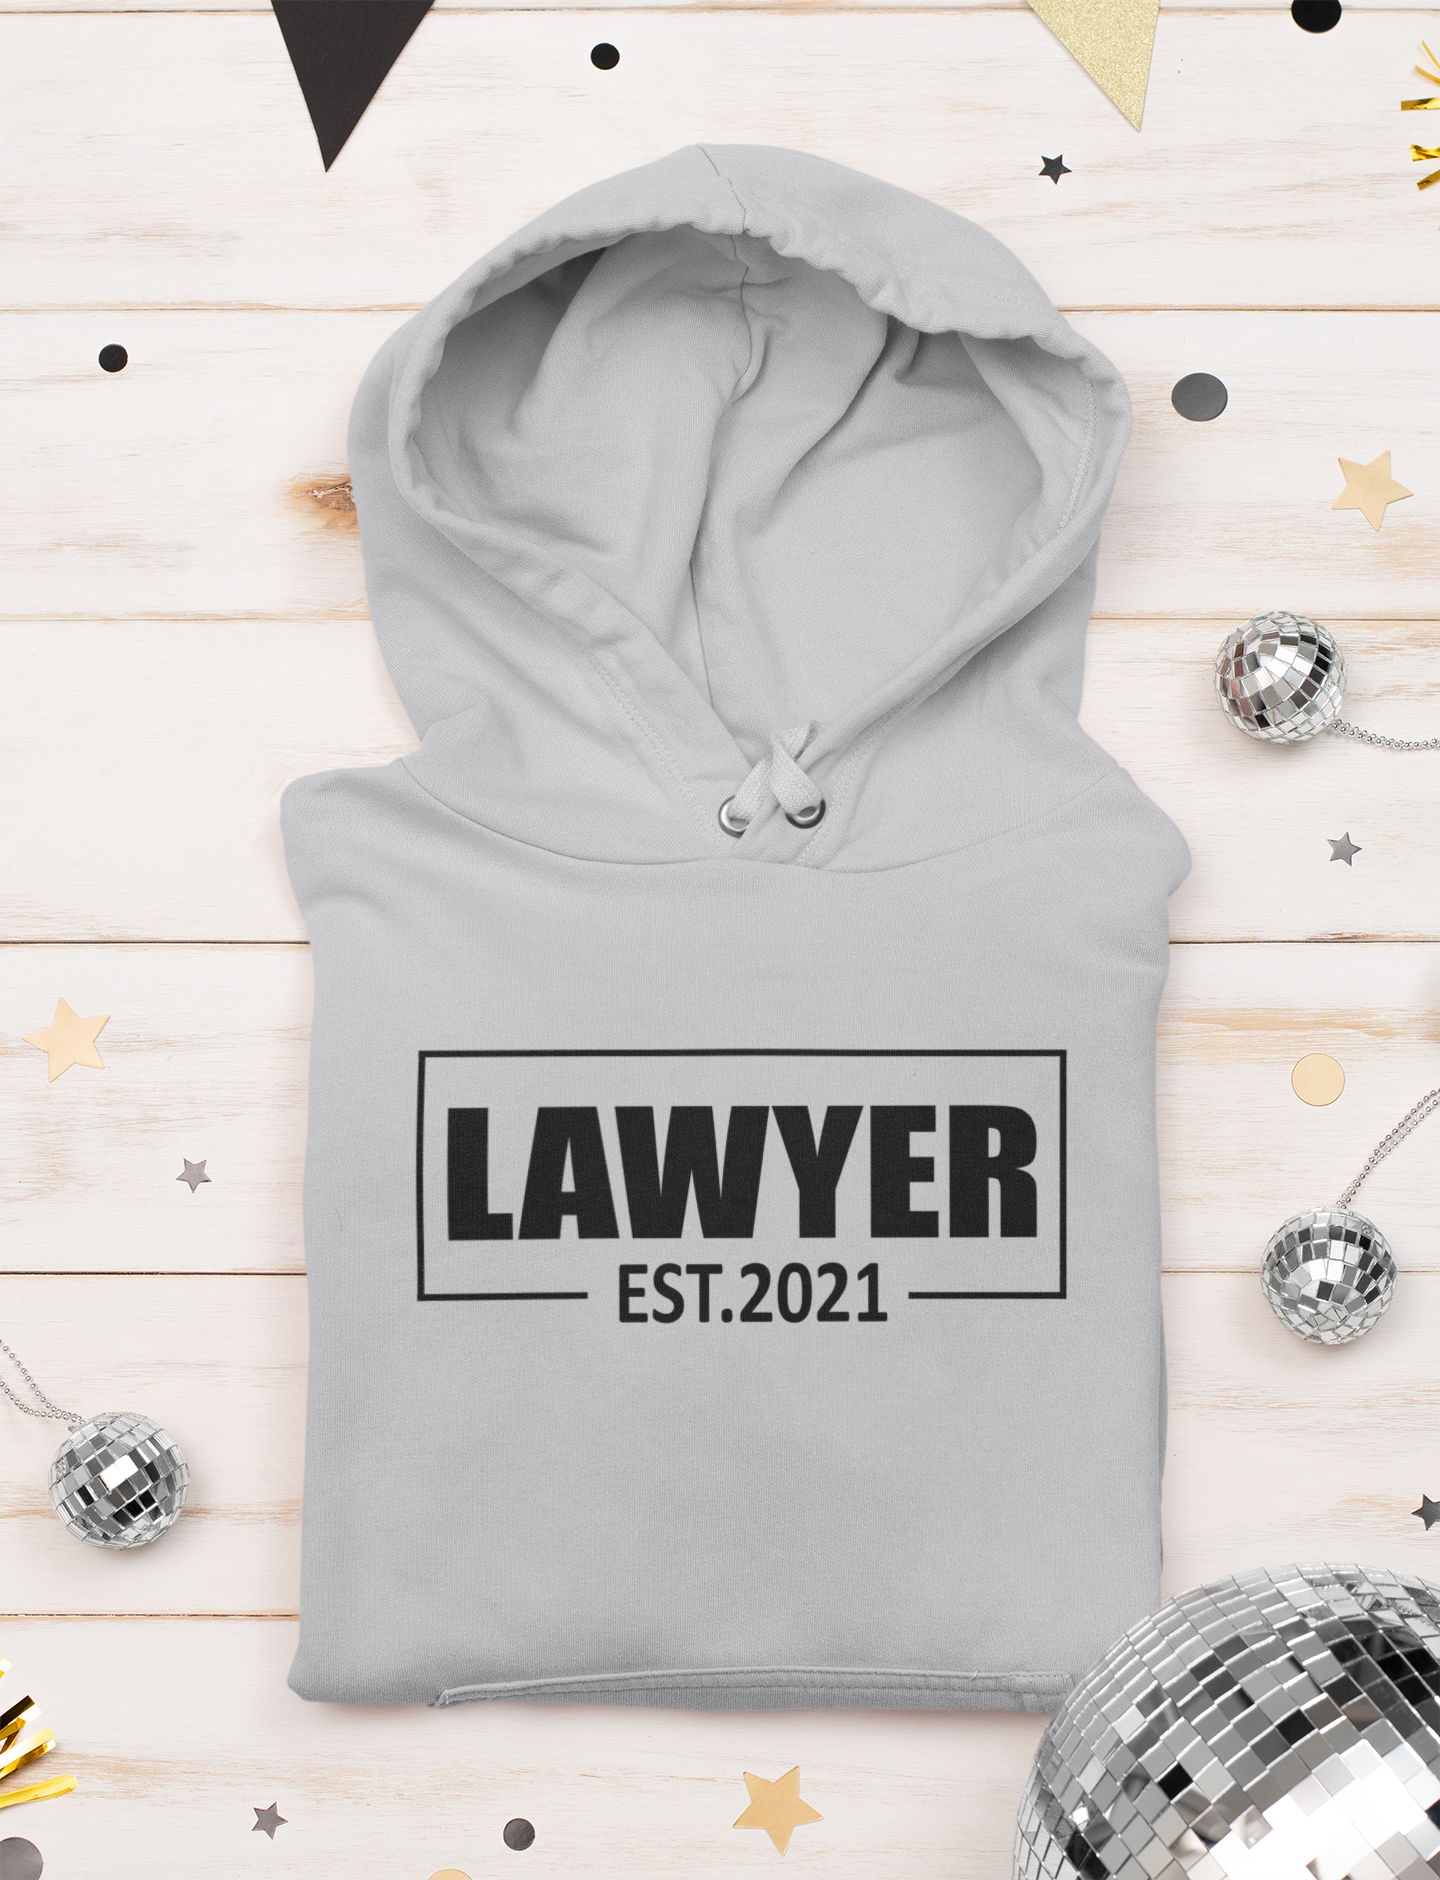 Lawyer Estd 2021 Men Hoodies-FunkyTeesClub